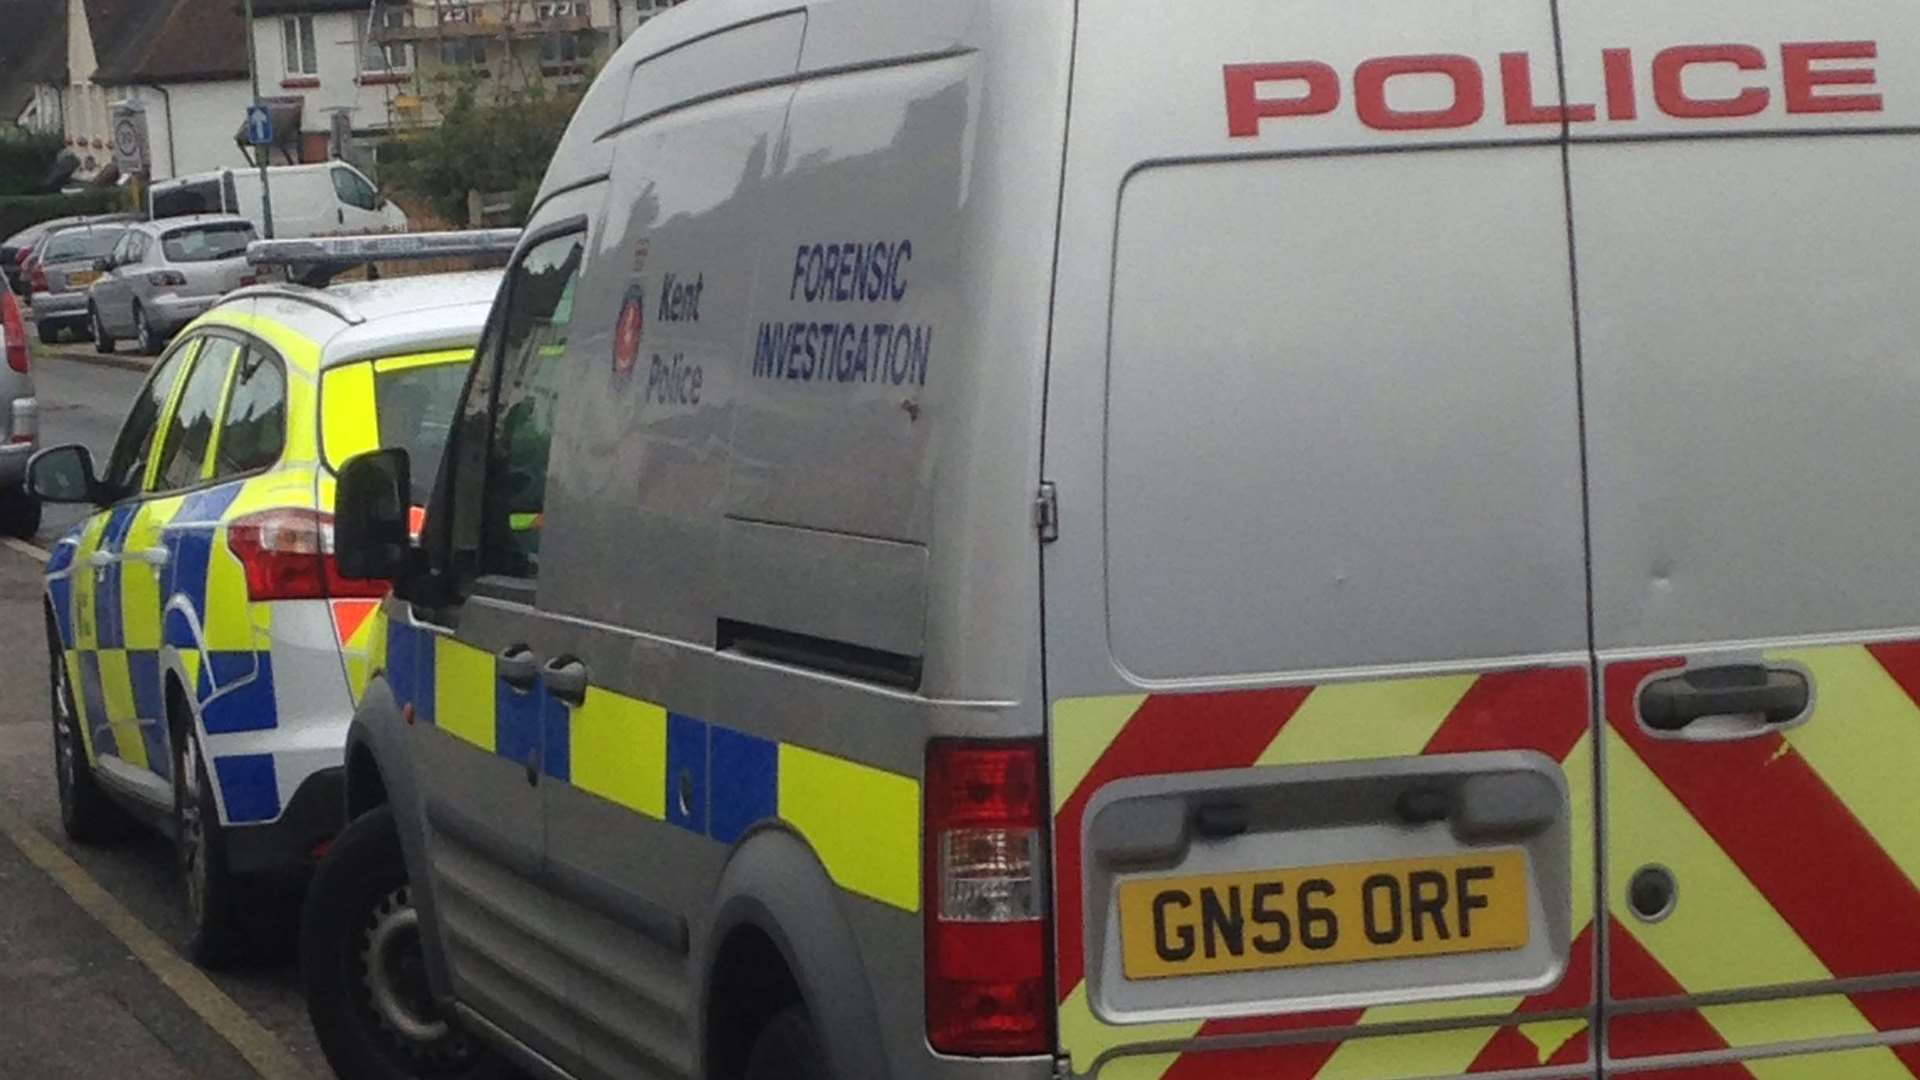 A police forensics van